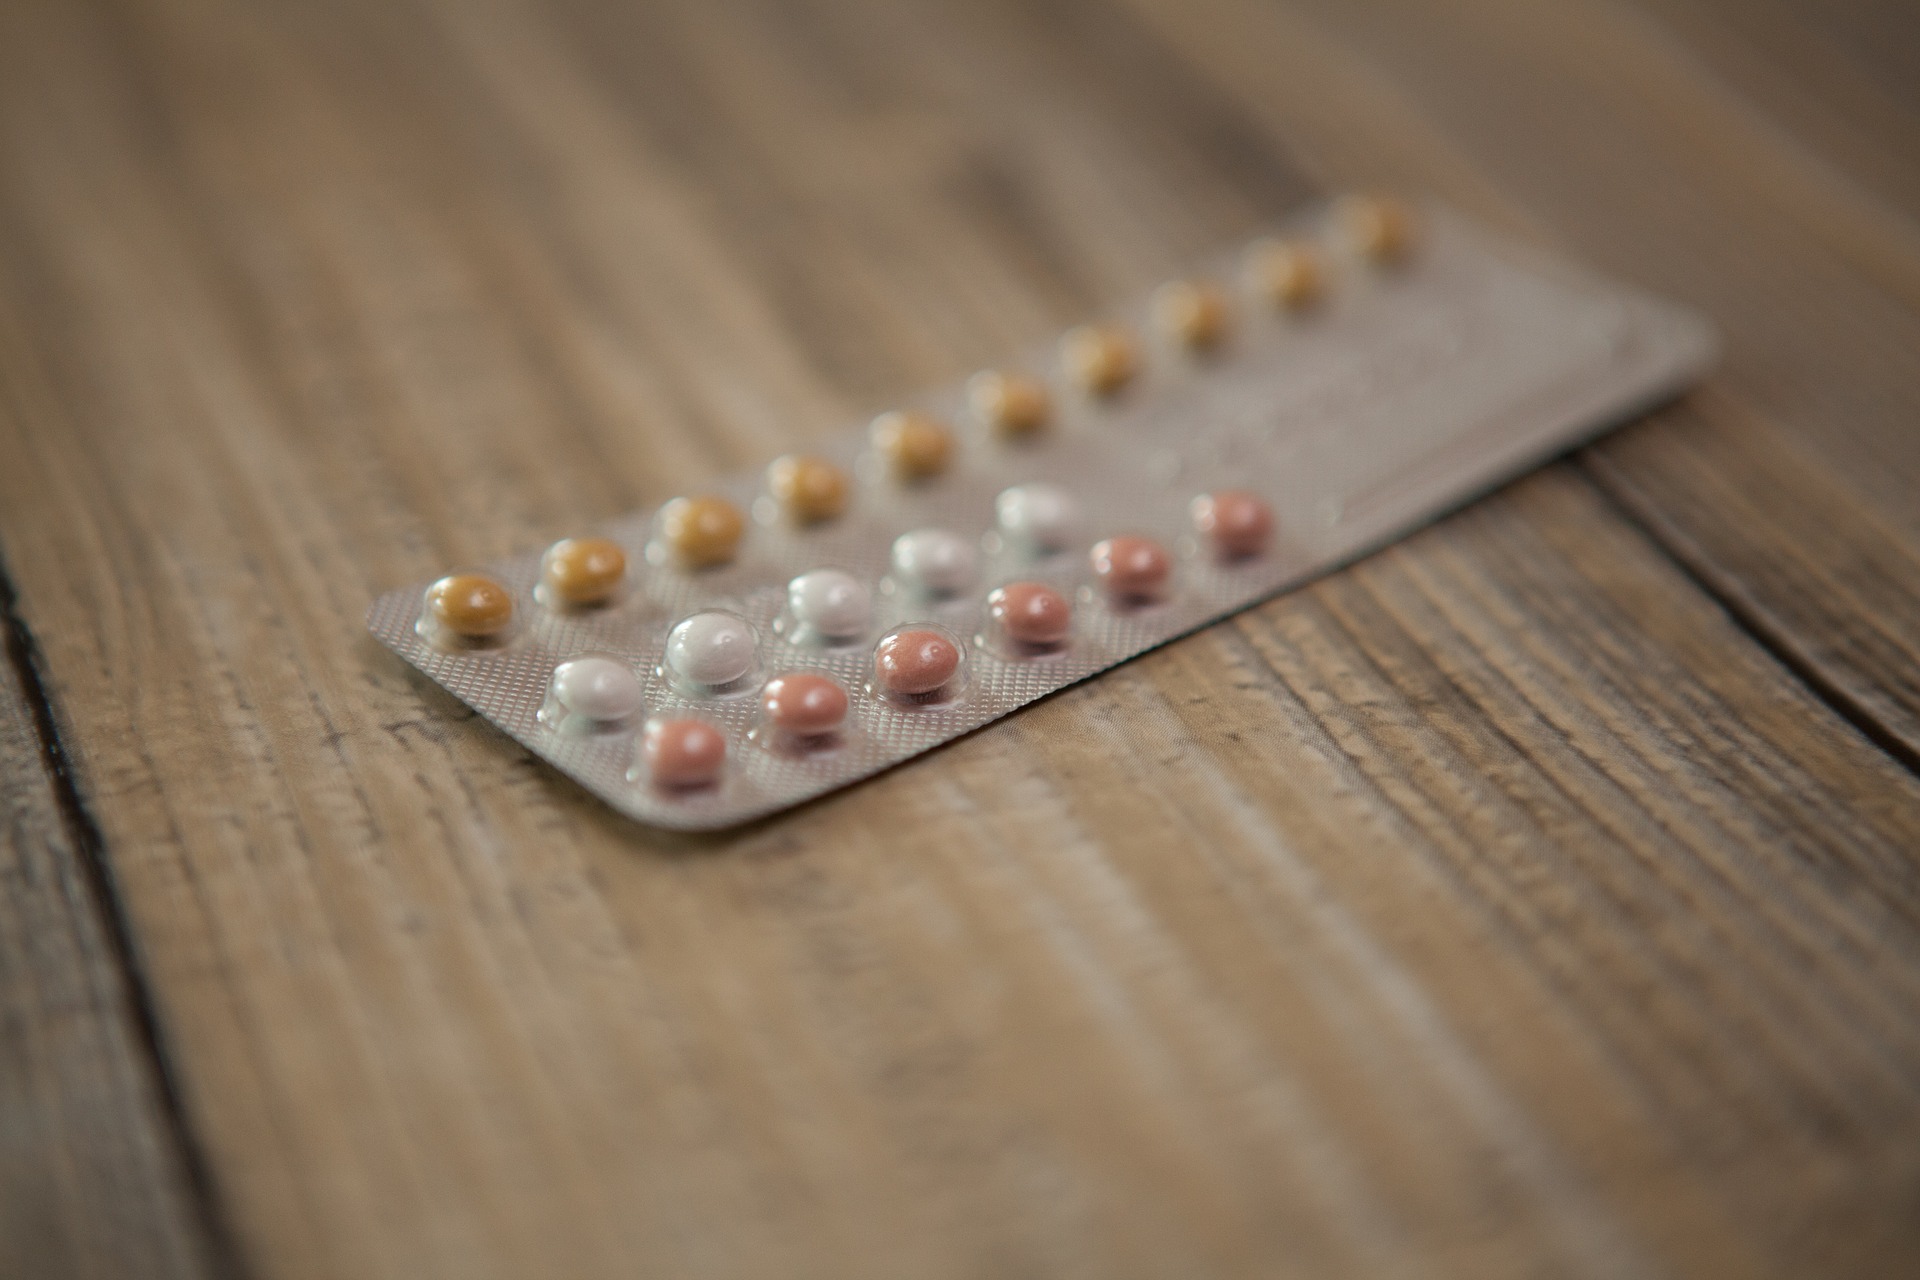 Can Birth Control Pills Cause Hypothyroidism?